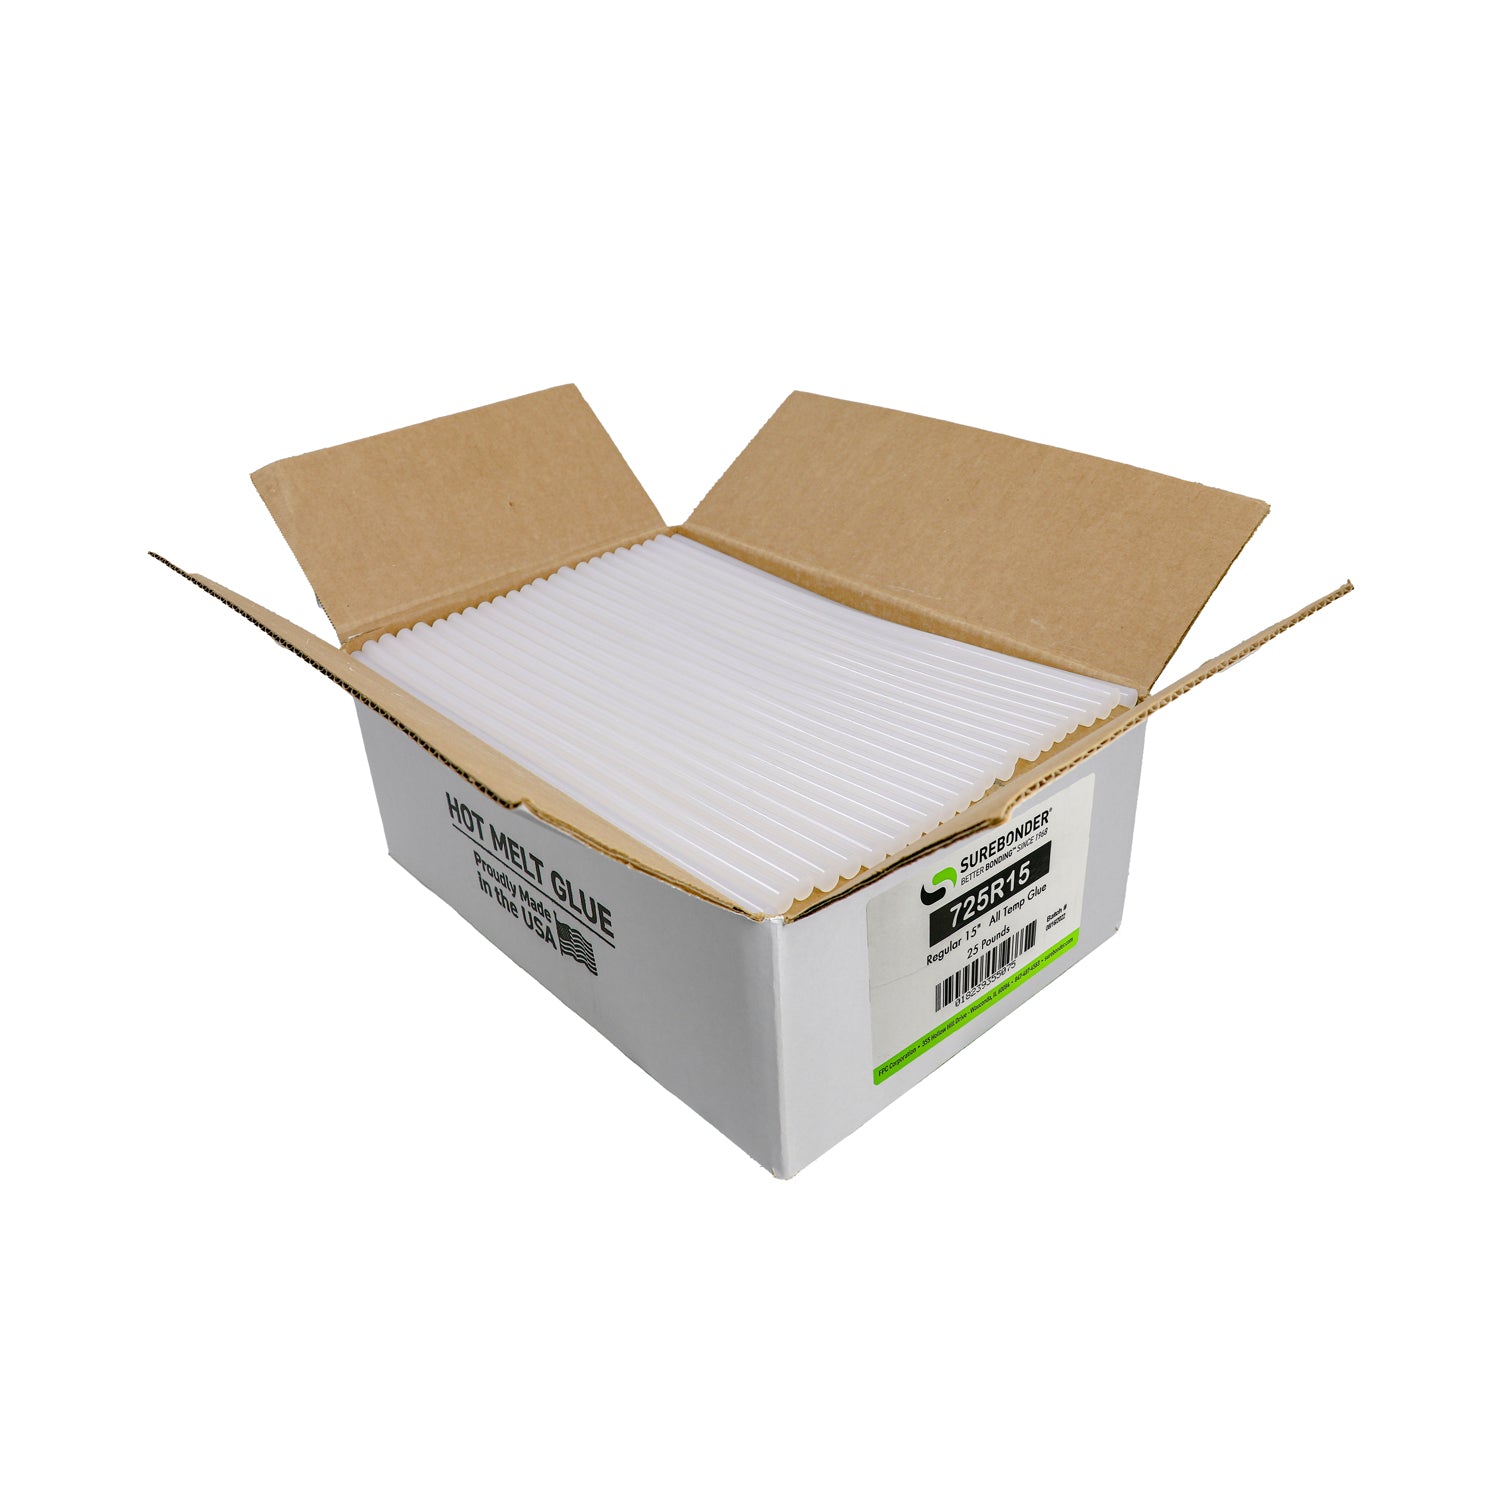 Surebonder 725R15 Full Size 15 Clear Hot Glue Stick - 25 lb Box